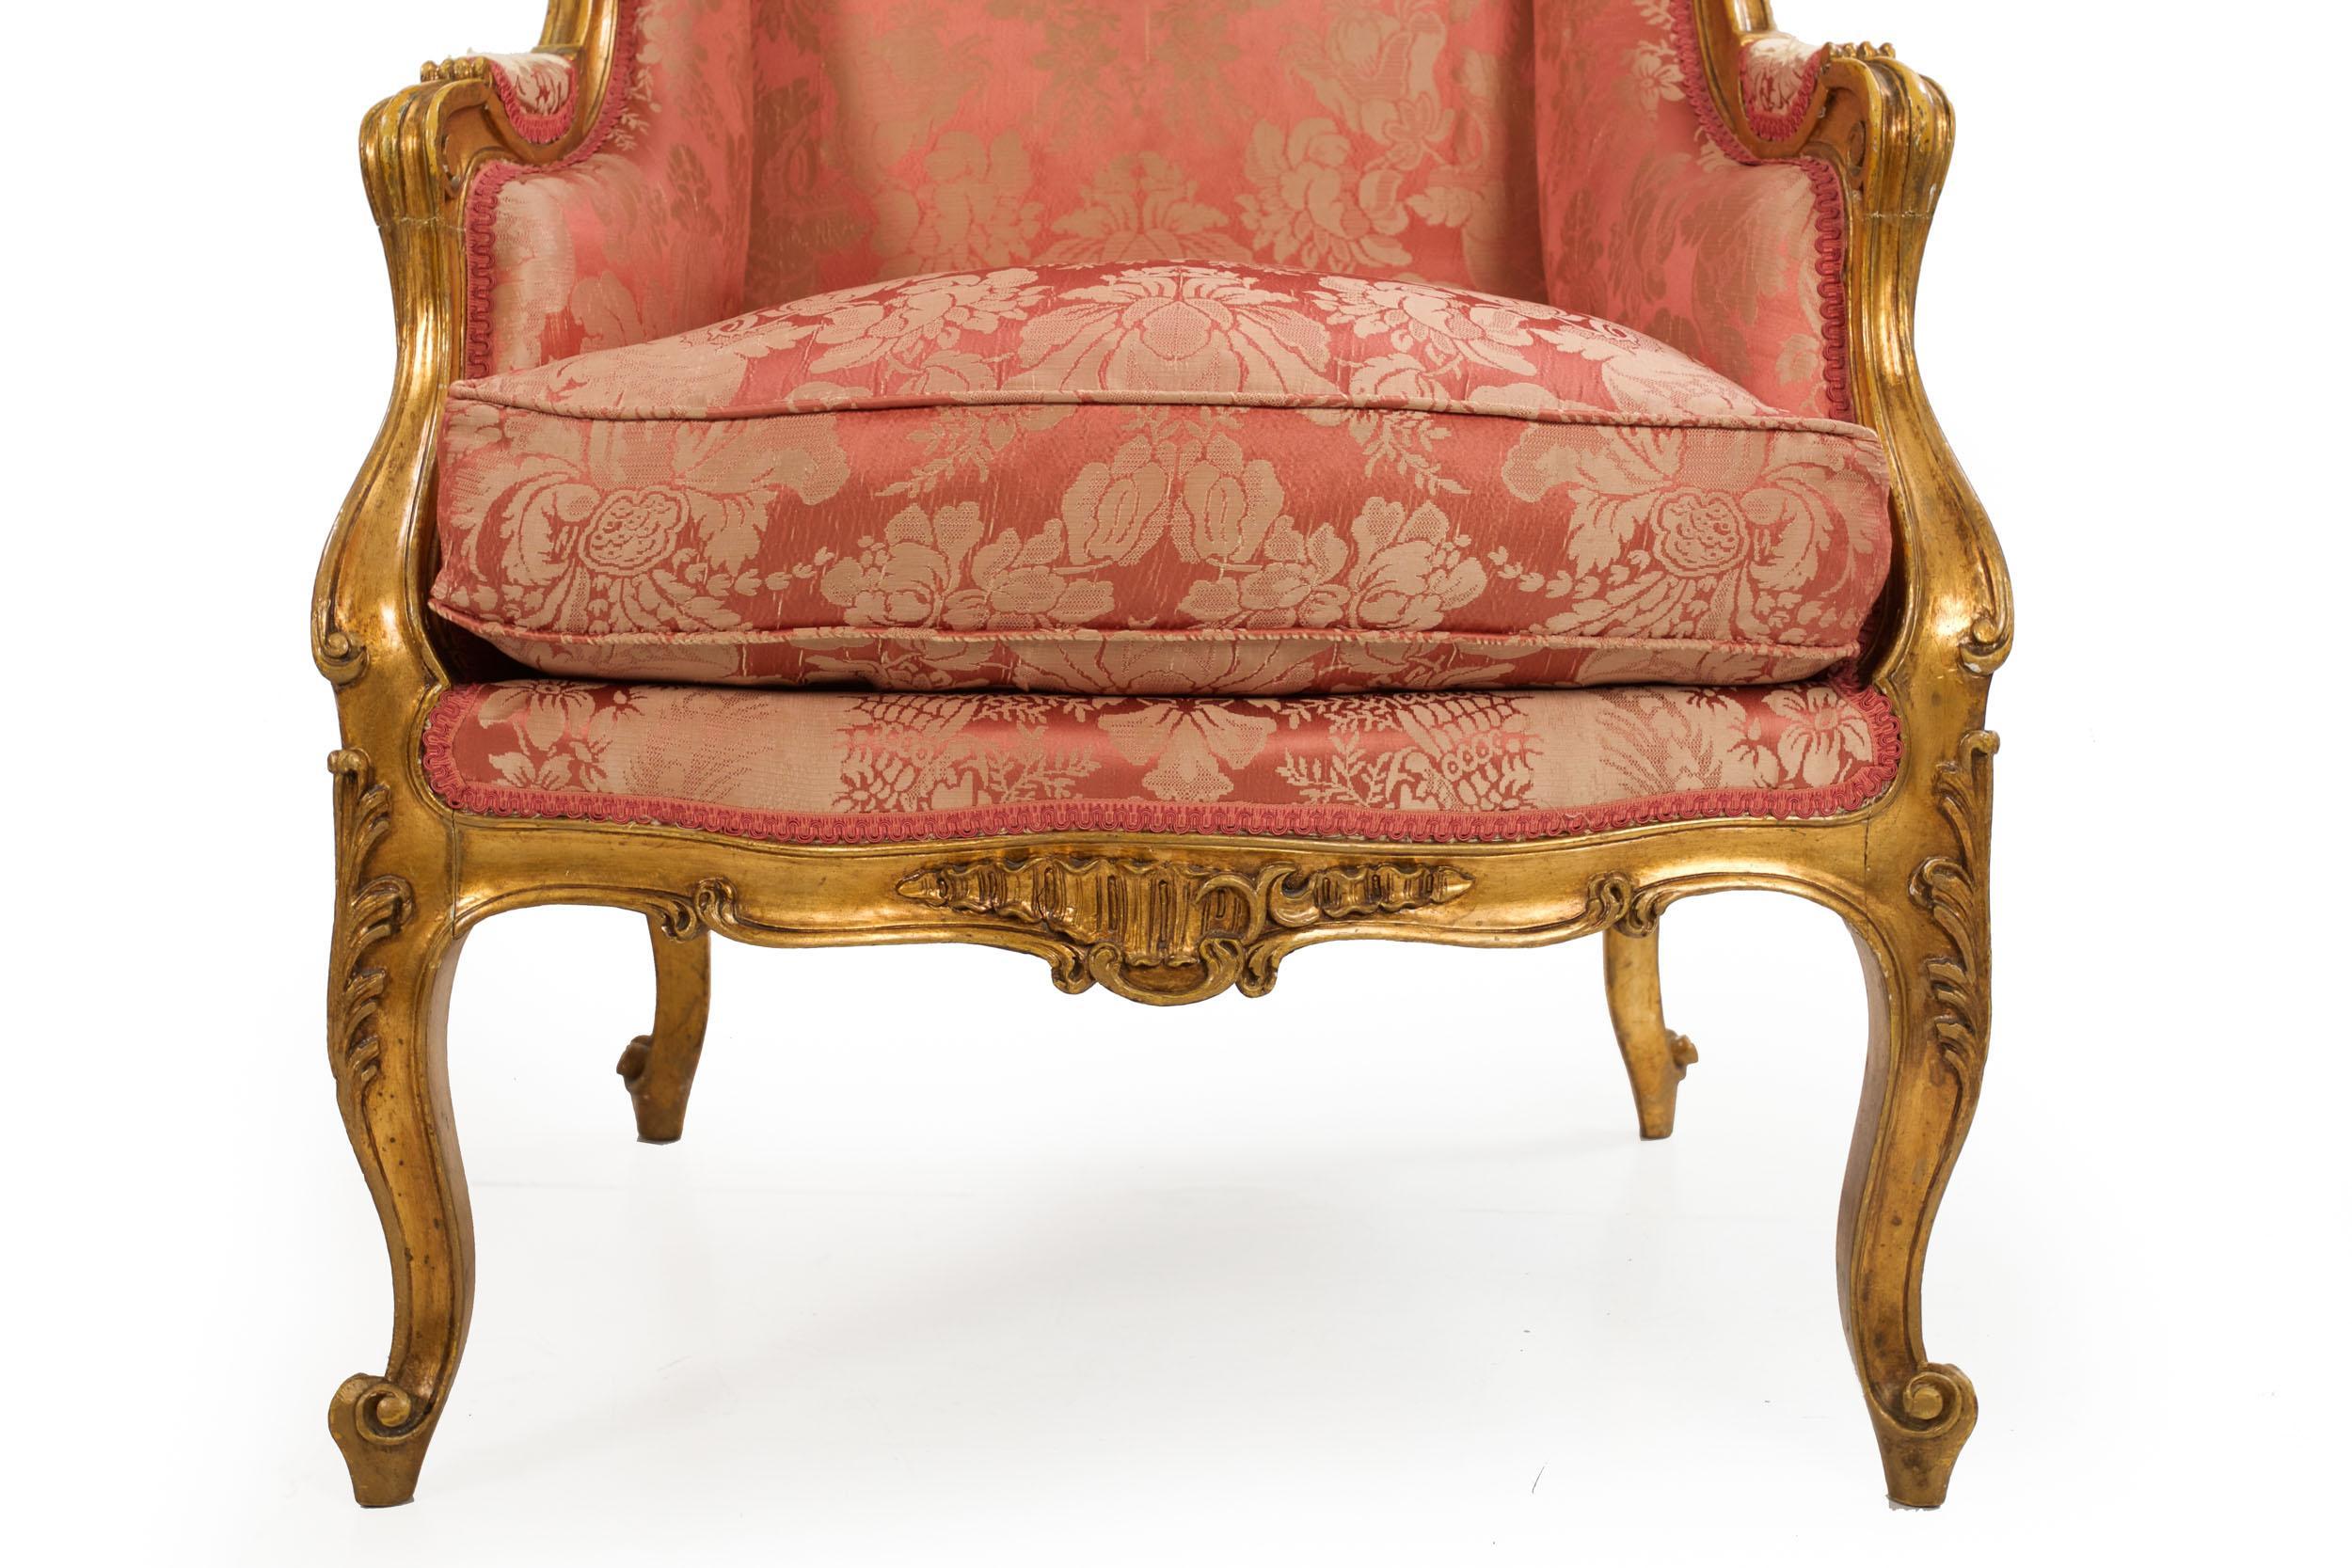 Circa 1880 French Louis XV Style Antique Arm Chairs, a Pair 1